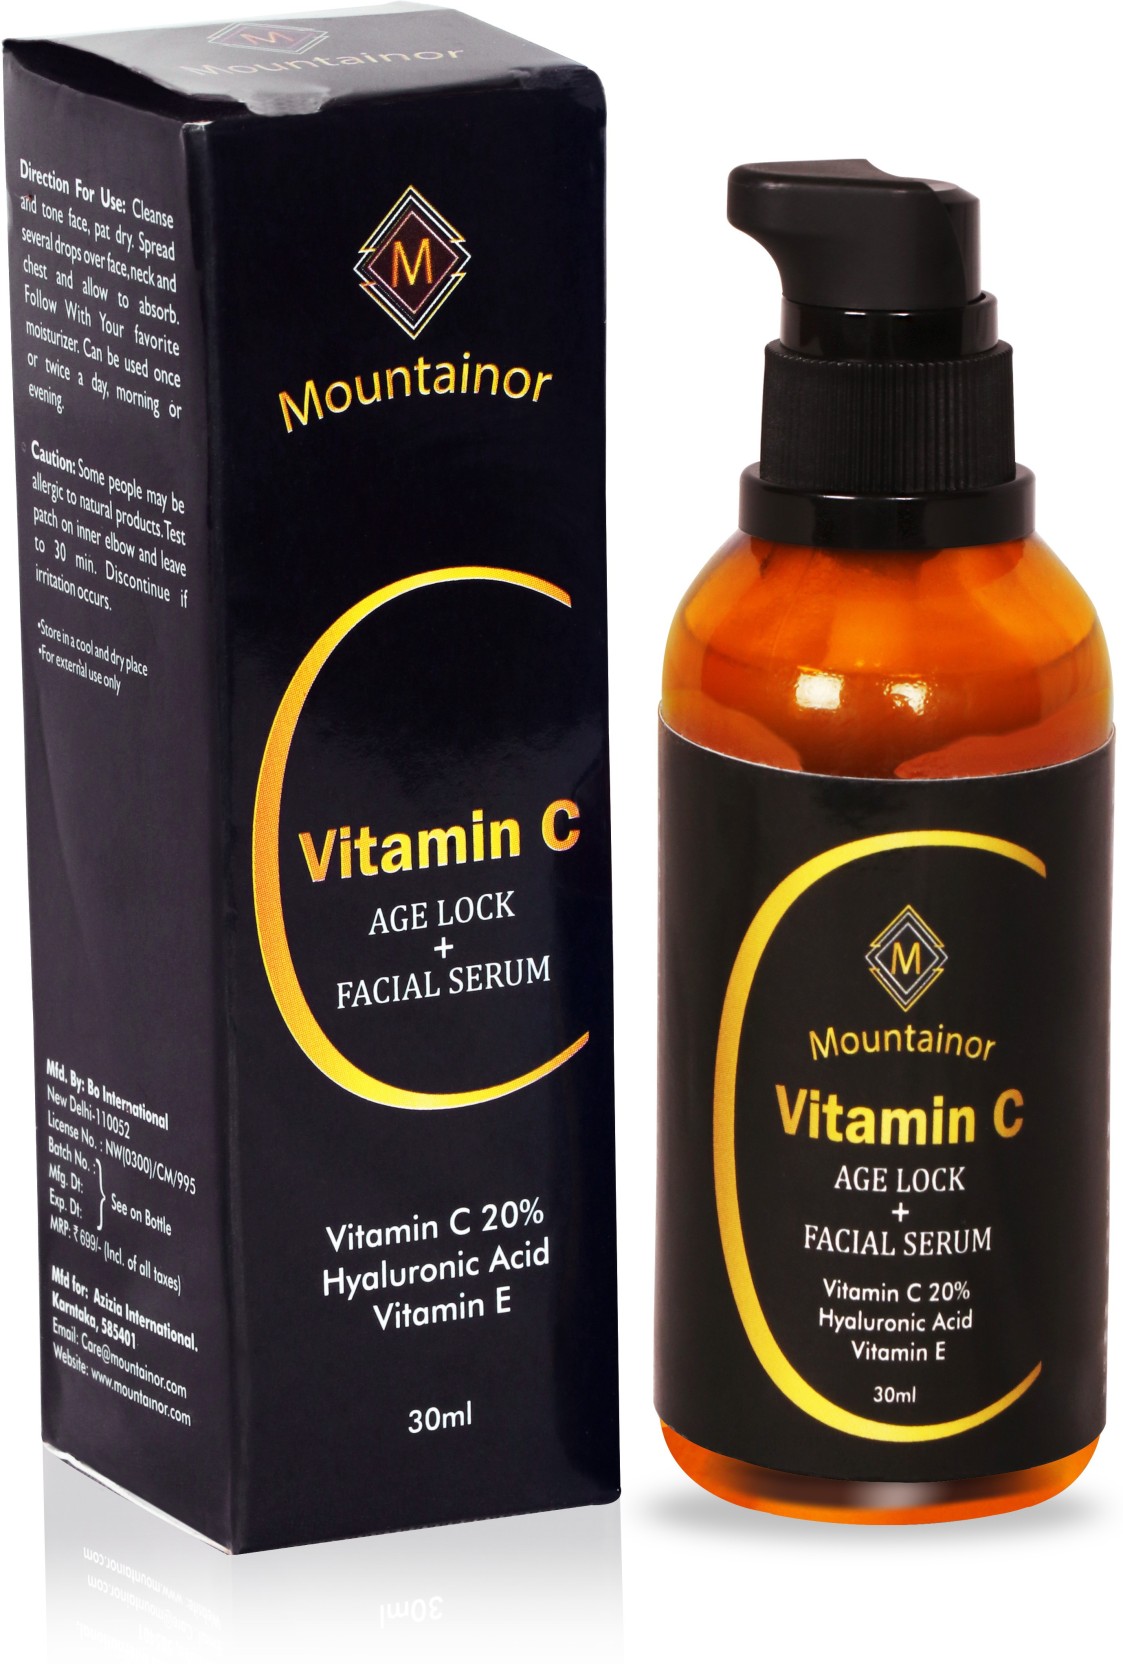 Mountainor Best Vitamin C Serum 30ml With Vitamin C 20 Hyaluronic Acid Vitamin E And Jojoba Oil Best For Acne Reduction Pigmentation Skin Whitening